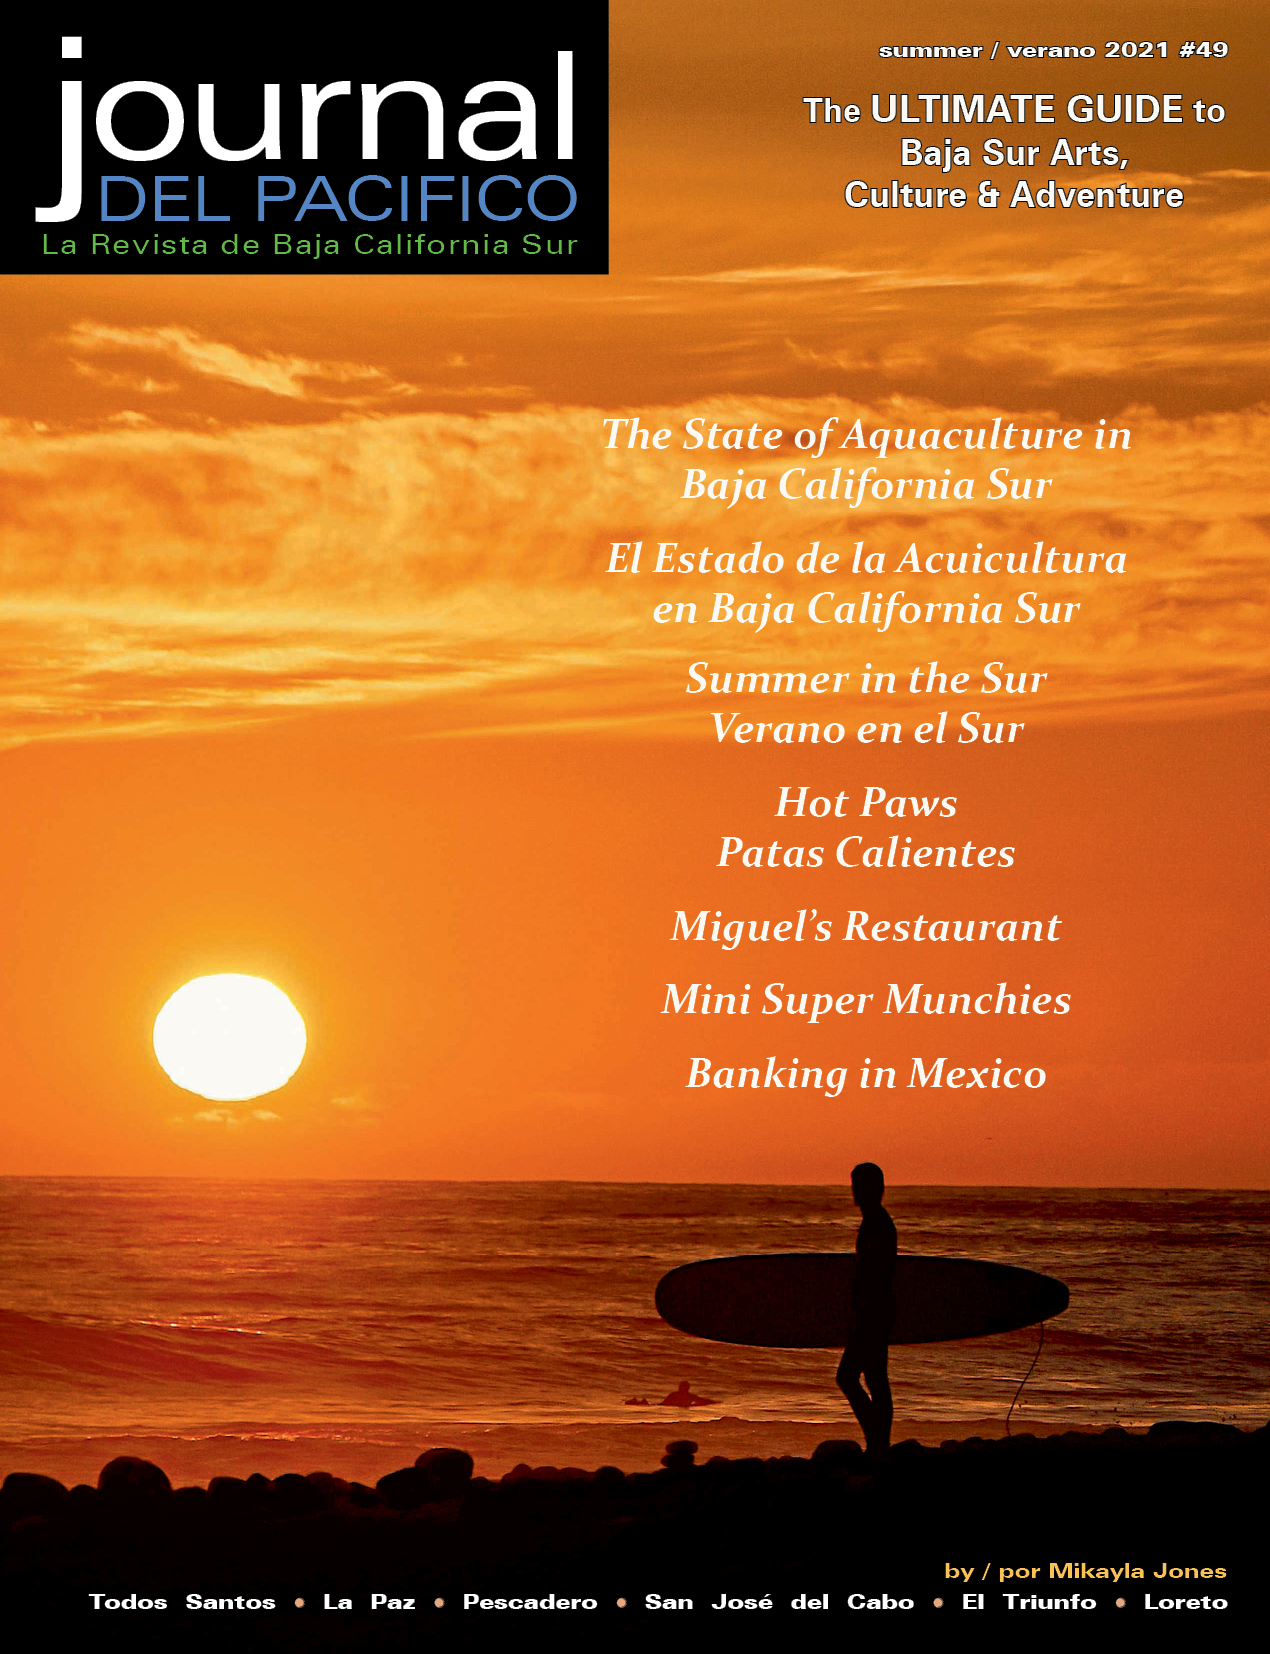 Summer/Verano 2021 Issue of Journal del Pacifico